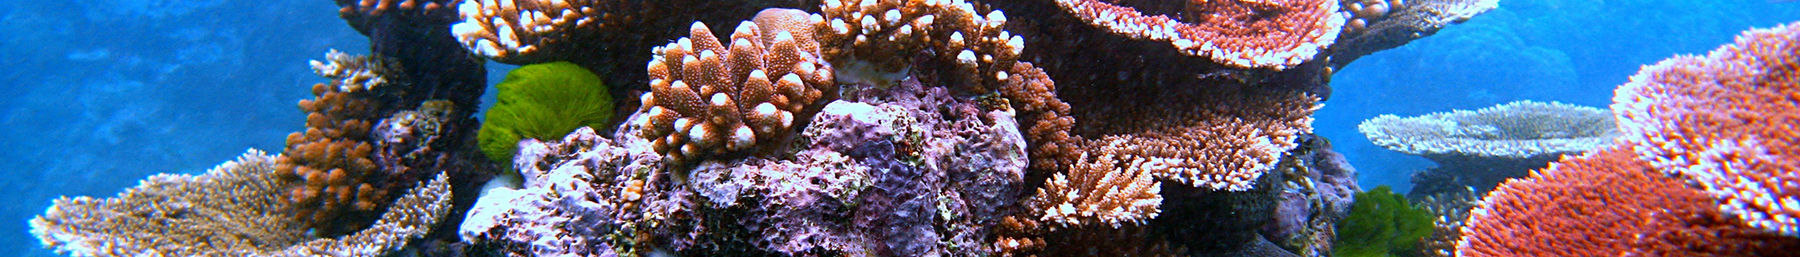 Flynn Reef, part of the Great Barrier Reef near Cairns, Queensland, Australia